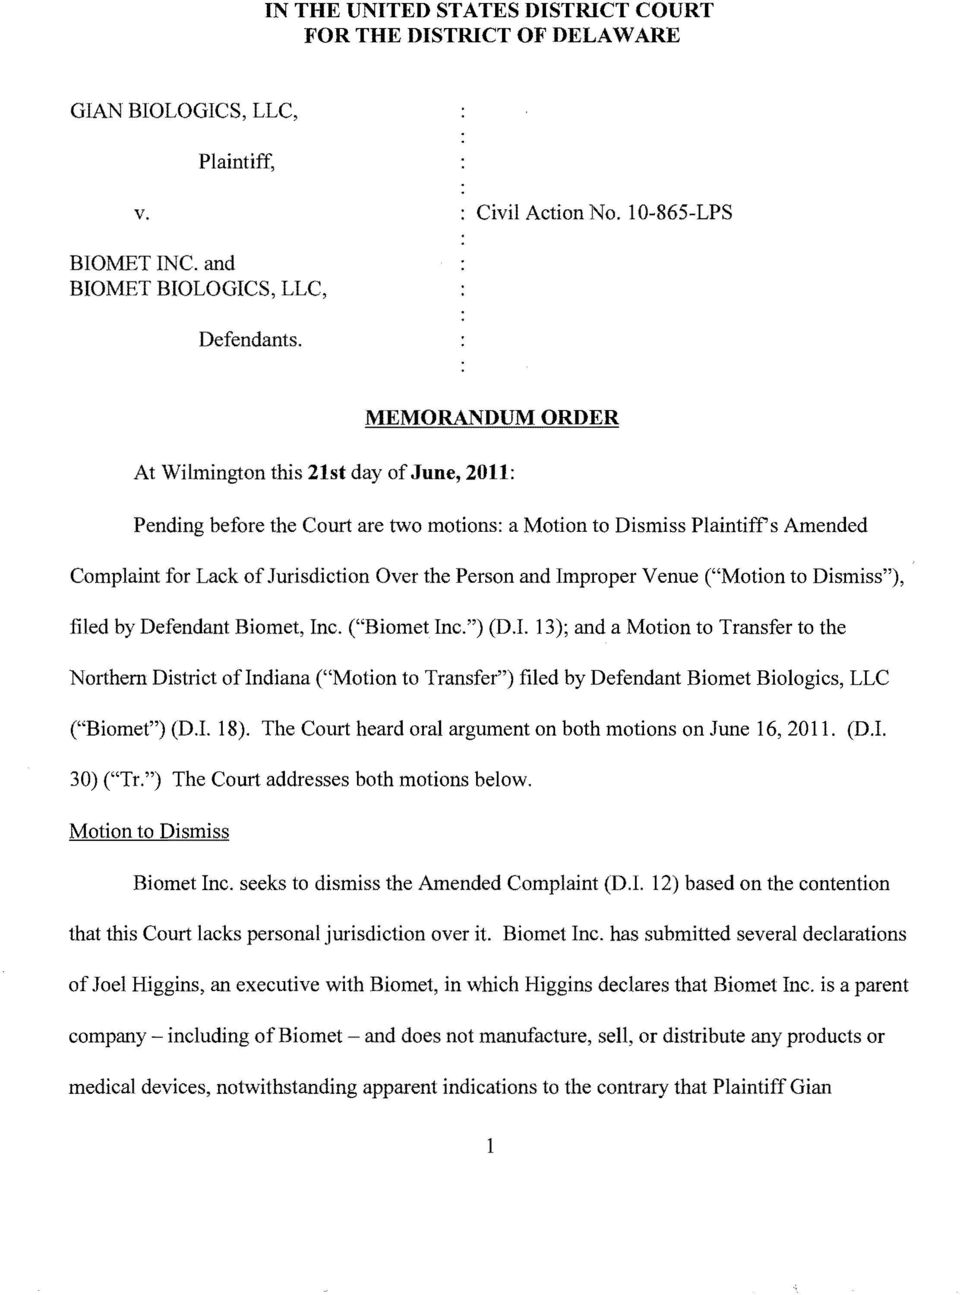 Improper Venue ("Motion to Dismiss"), filed by Defendant Biomet, Inc. ("Biomet Inc.") (D.